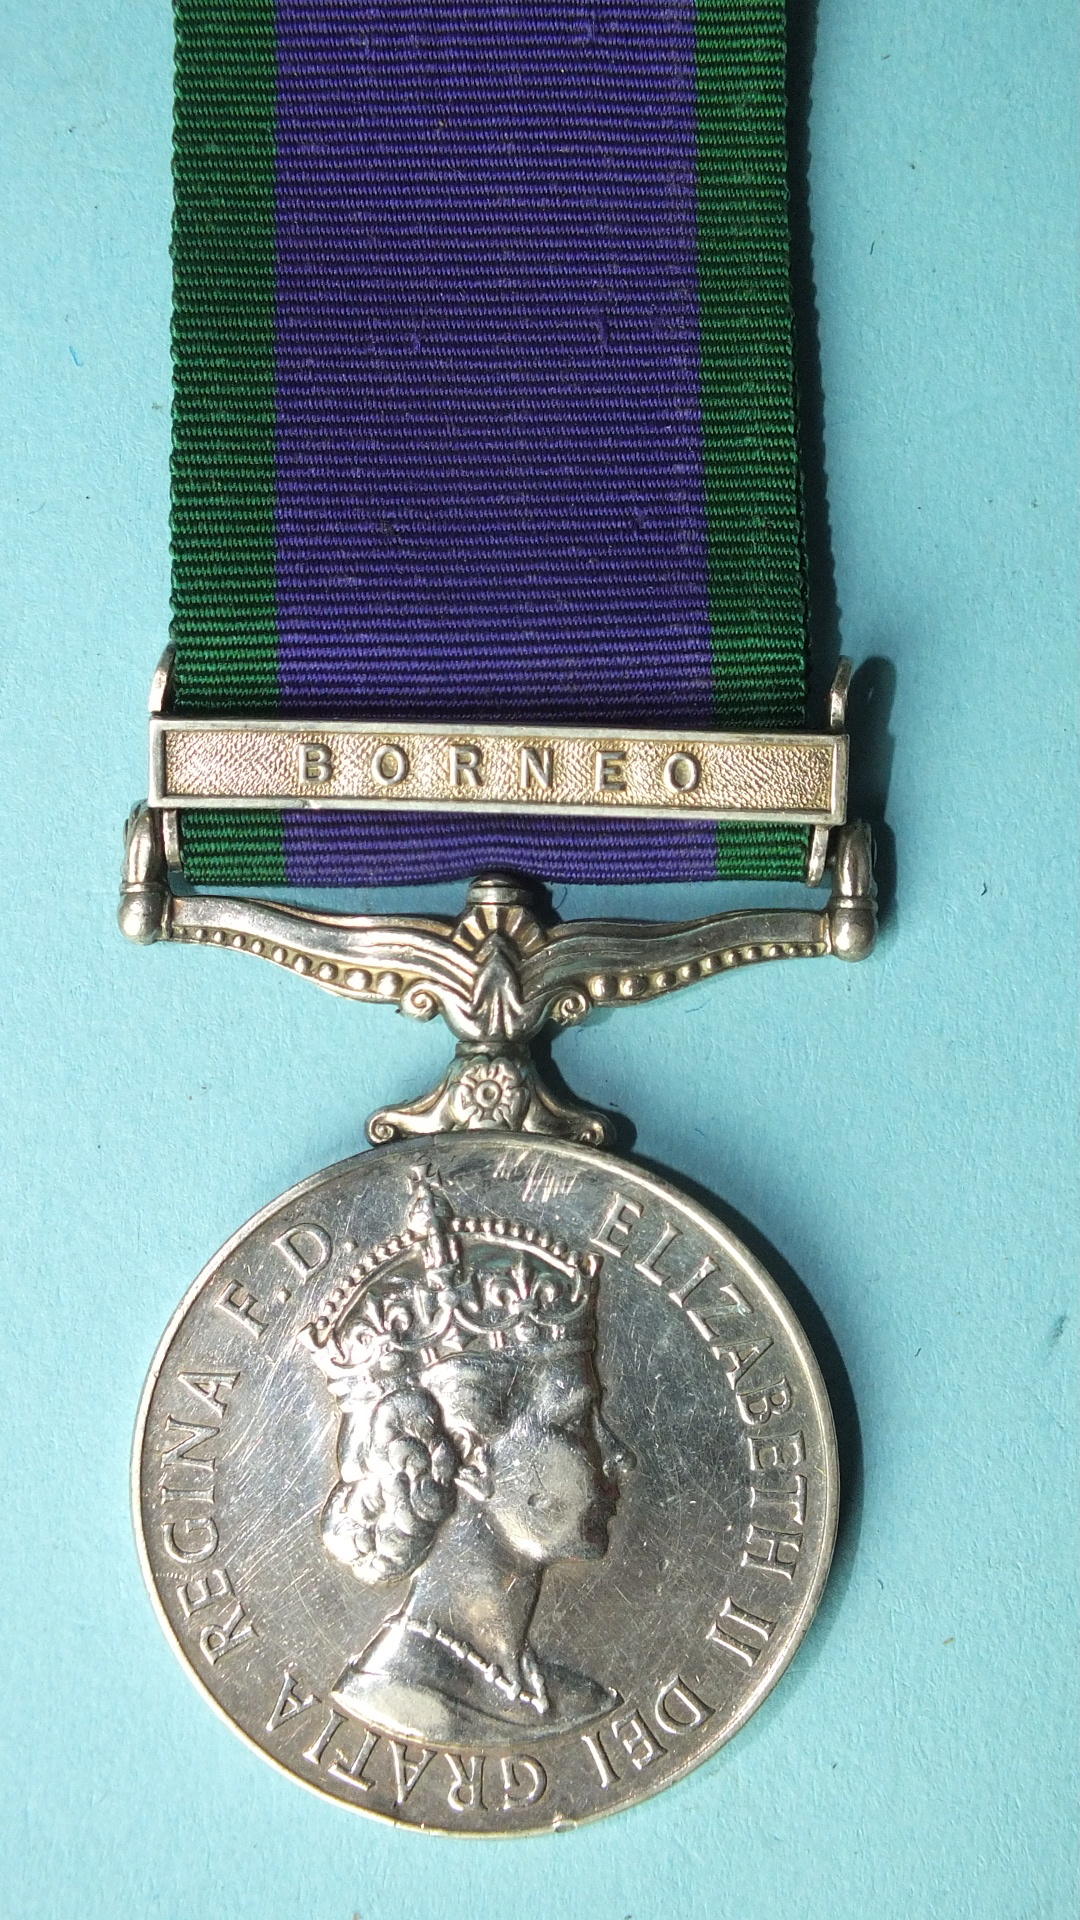 General Service Medal 1962-2007 awarded to 23956664 Sig J R Ozog R Signals.